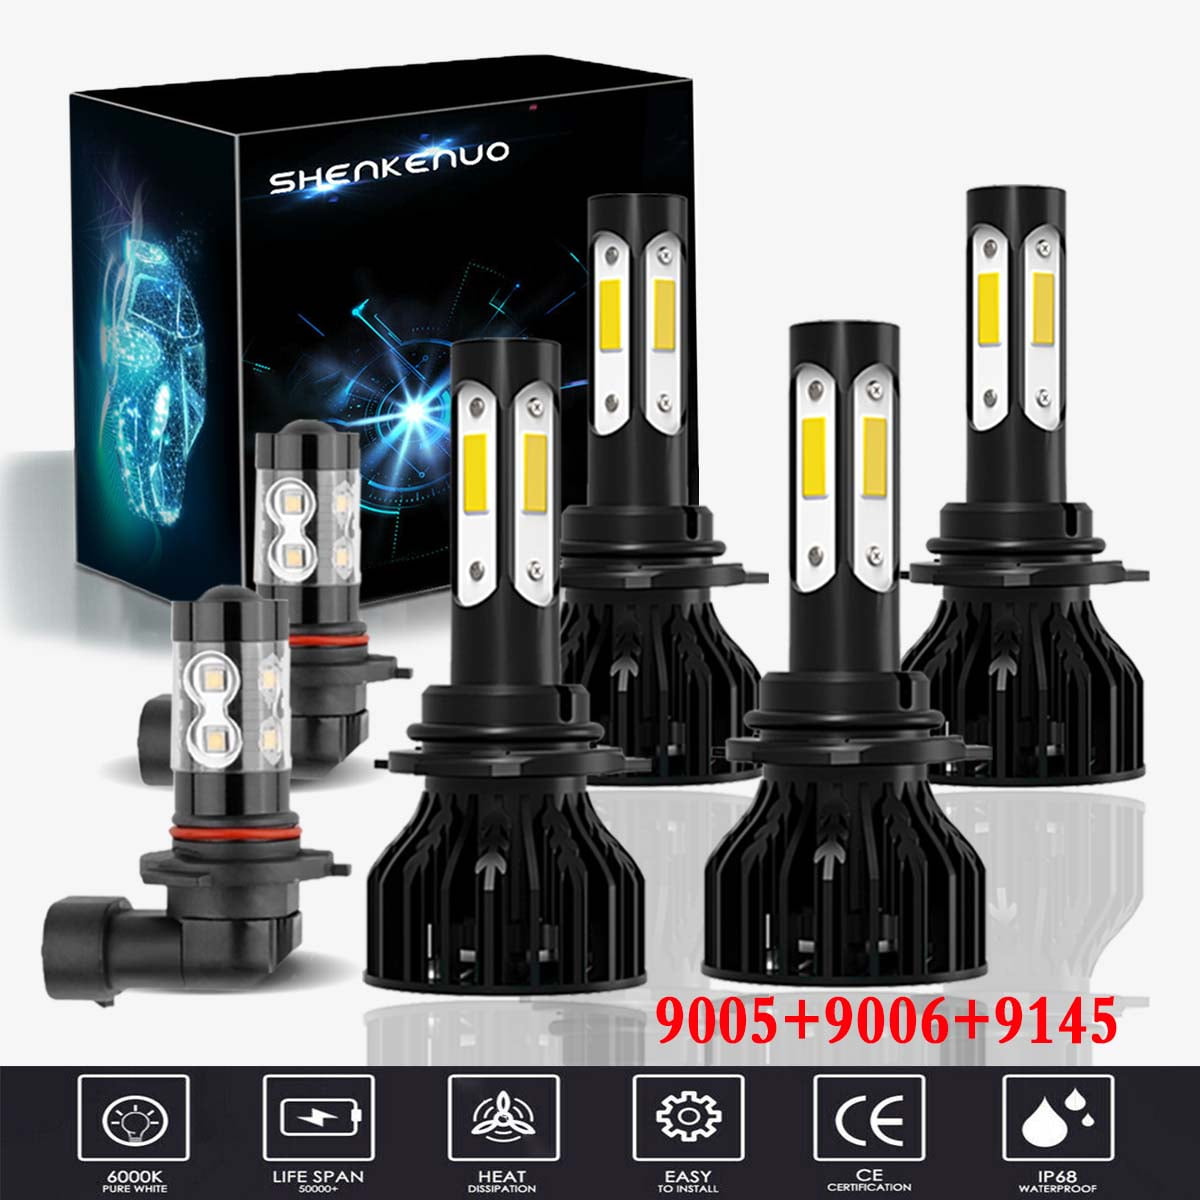 9005+9006+9145 LED Headlight Fog Bulb Kit for Chevy Silverado 1500 2500 HD 03-06 